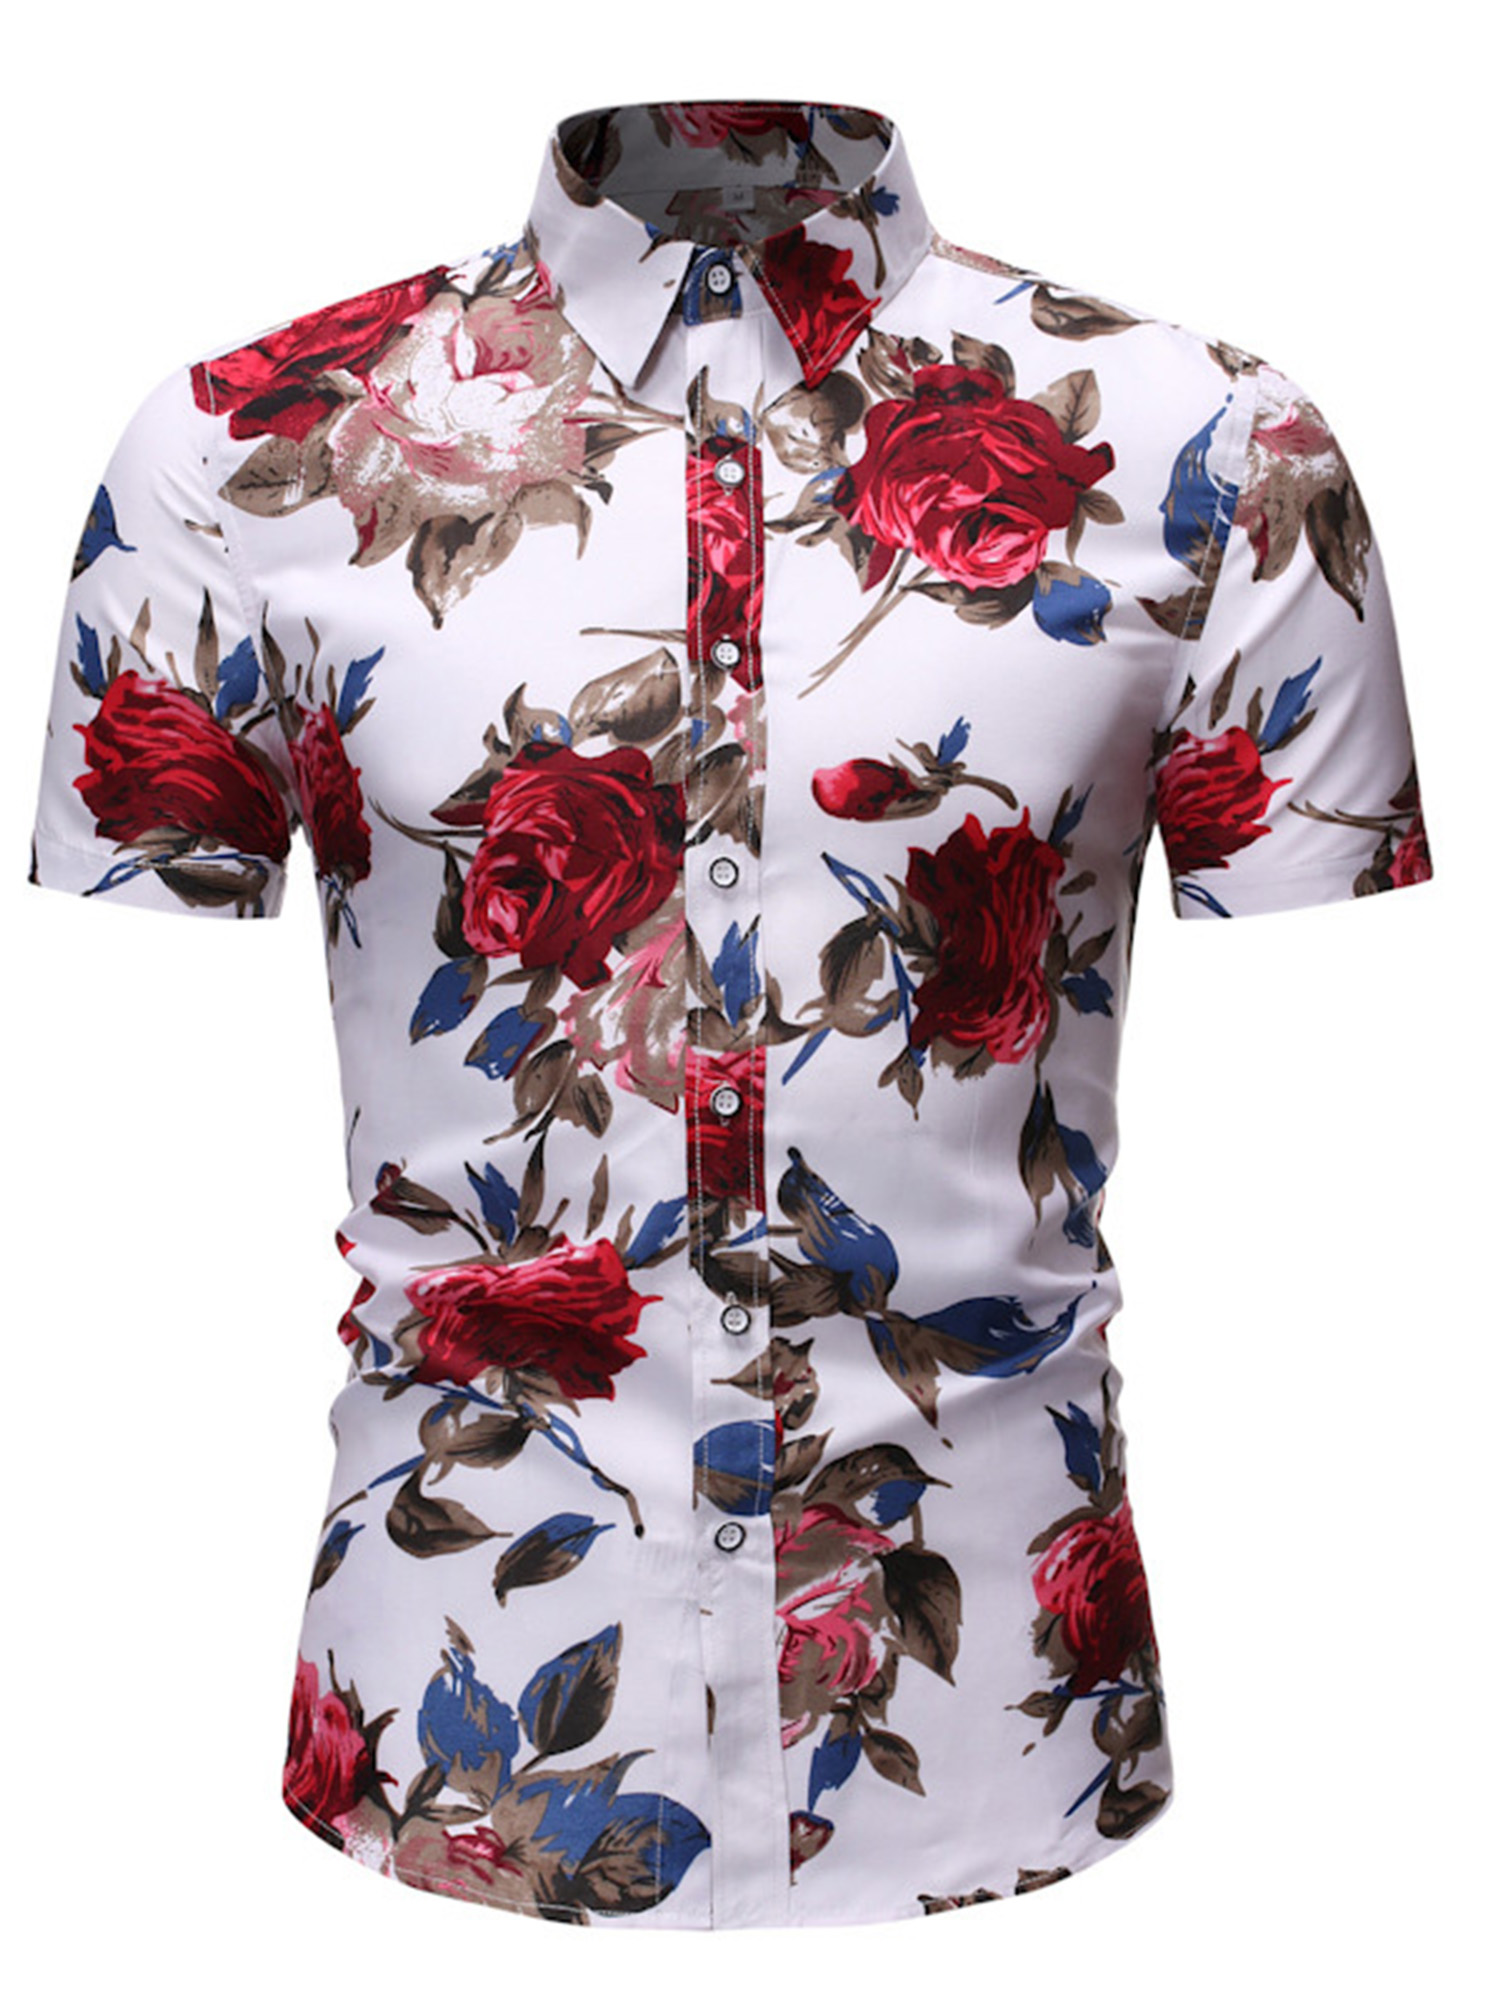 Men's Marc Anthony Slim-Fit Hawaiian Shirt